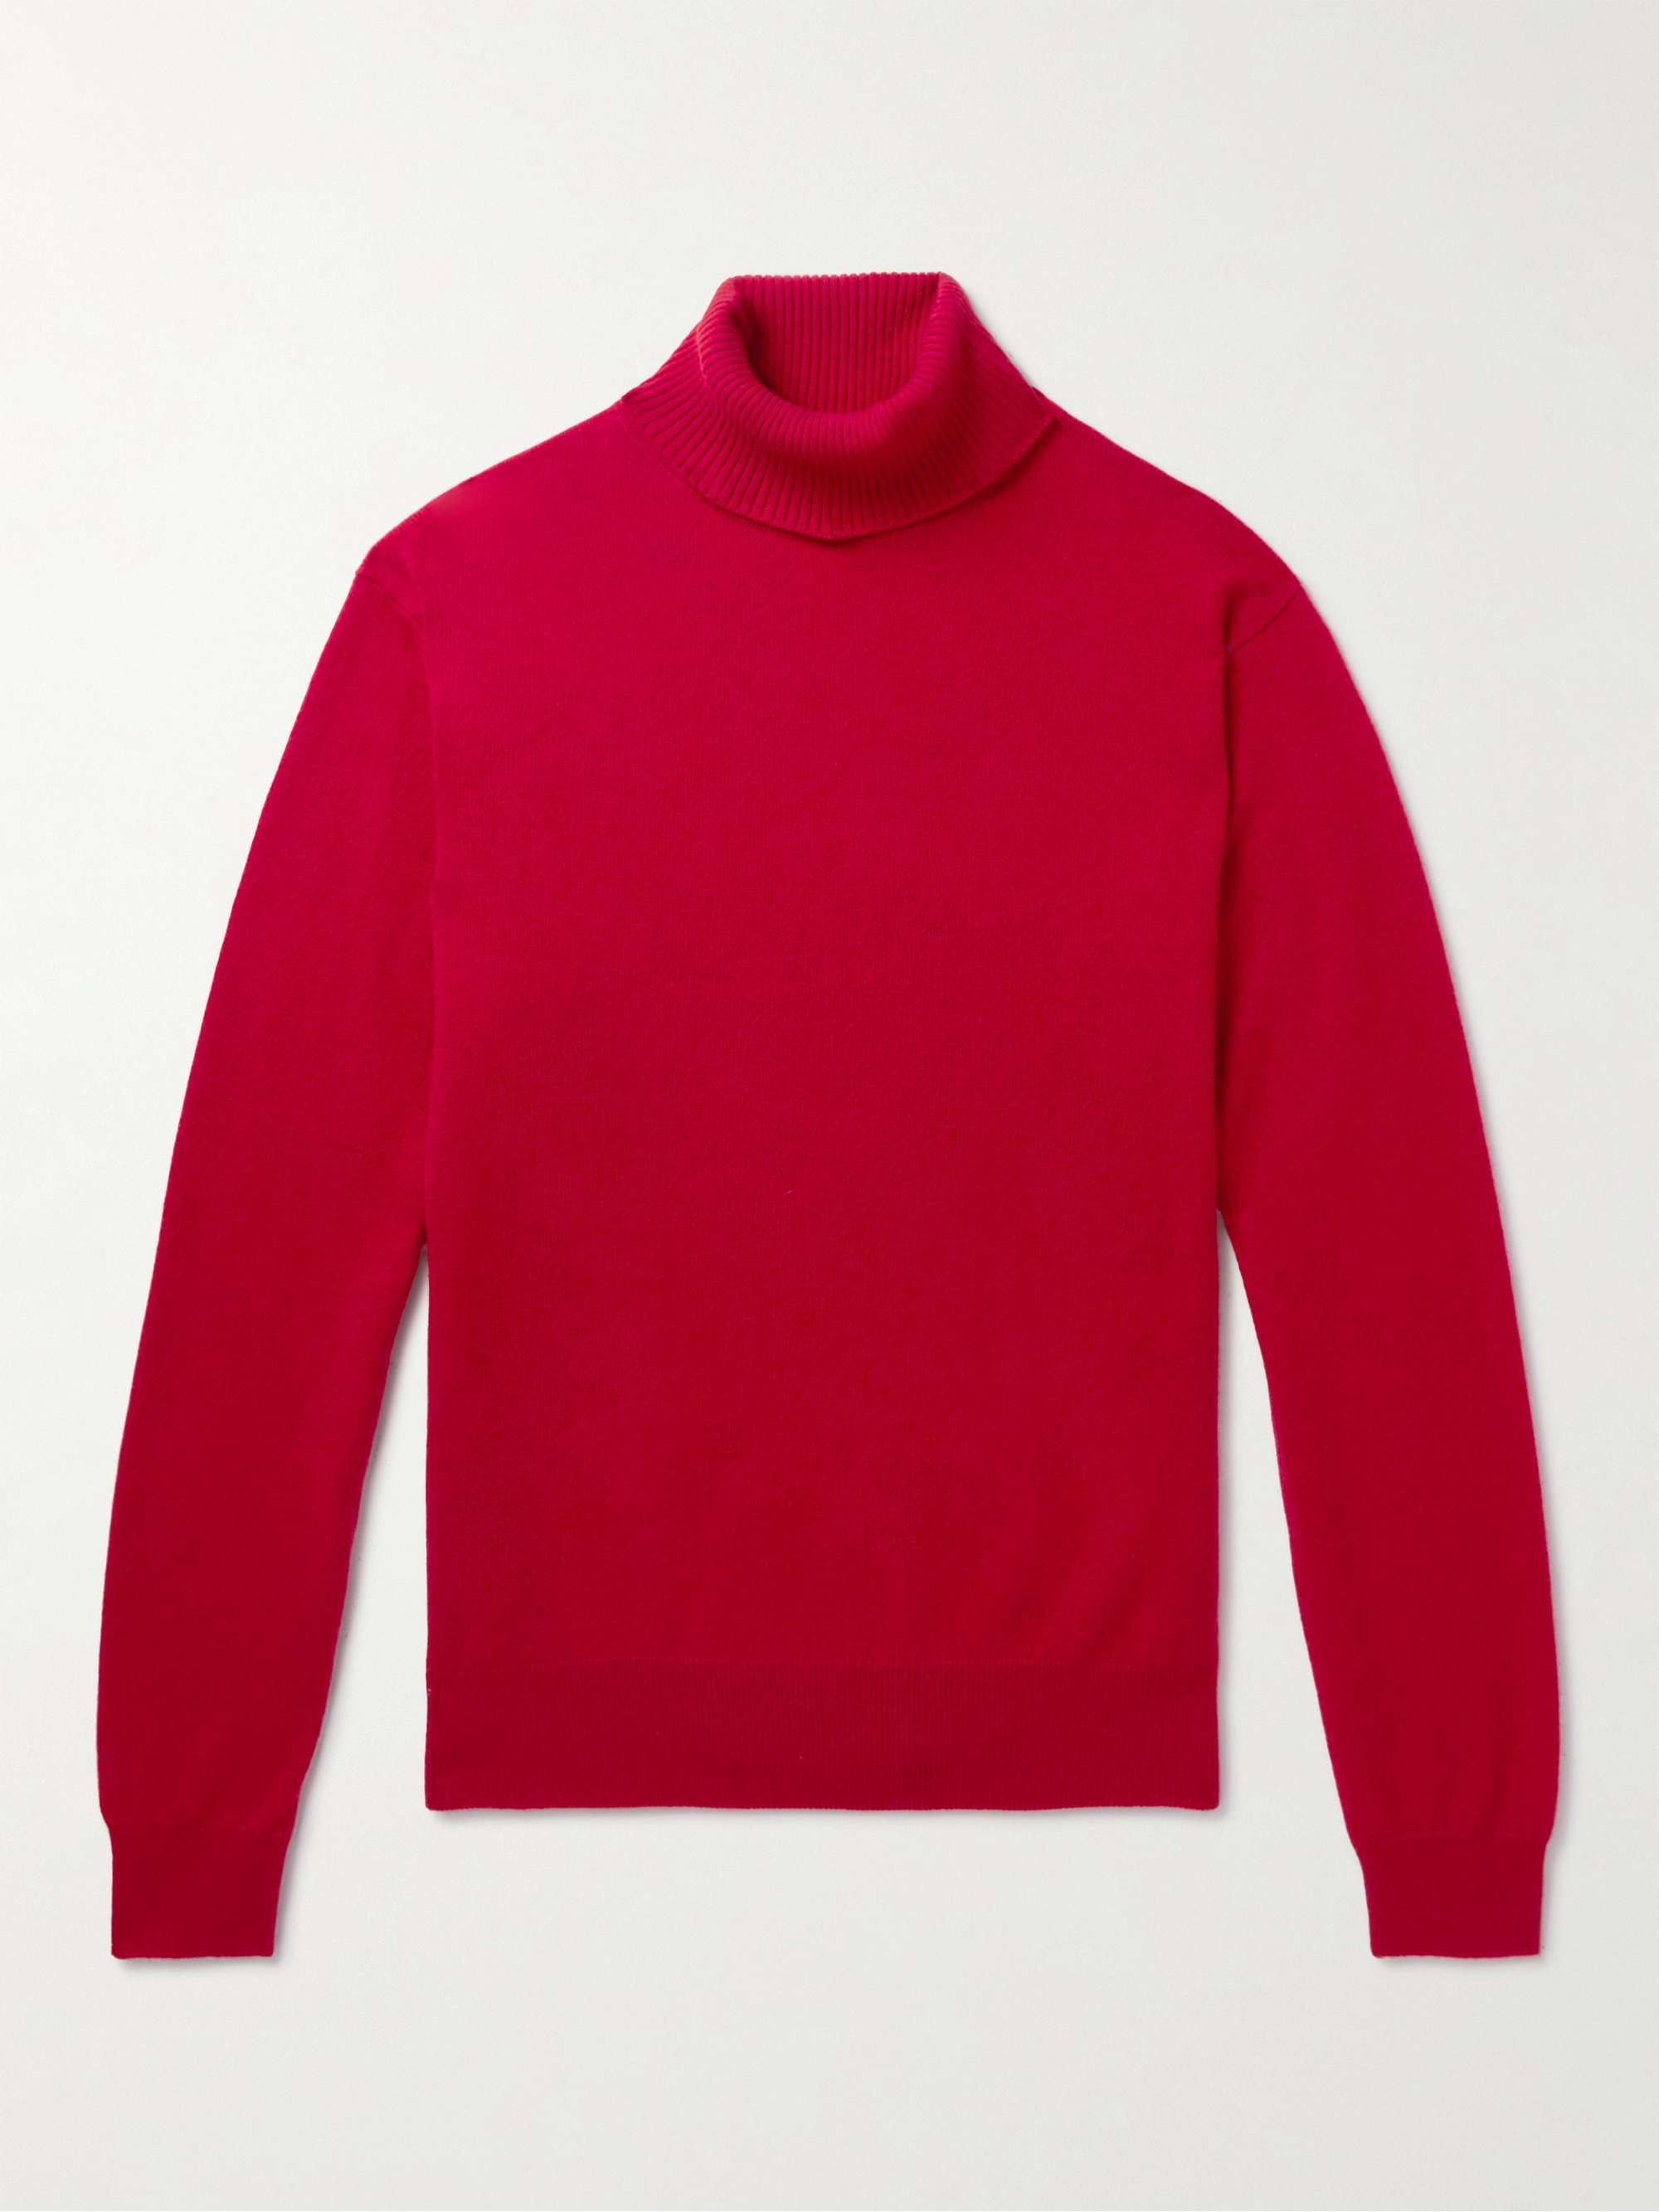 TOM FORD Slim-Fit Cashmere Rollneck Sweater